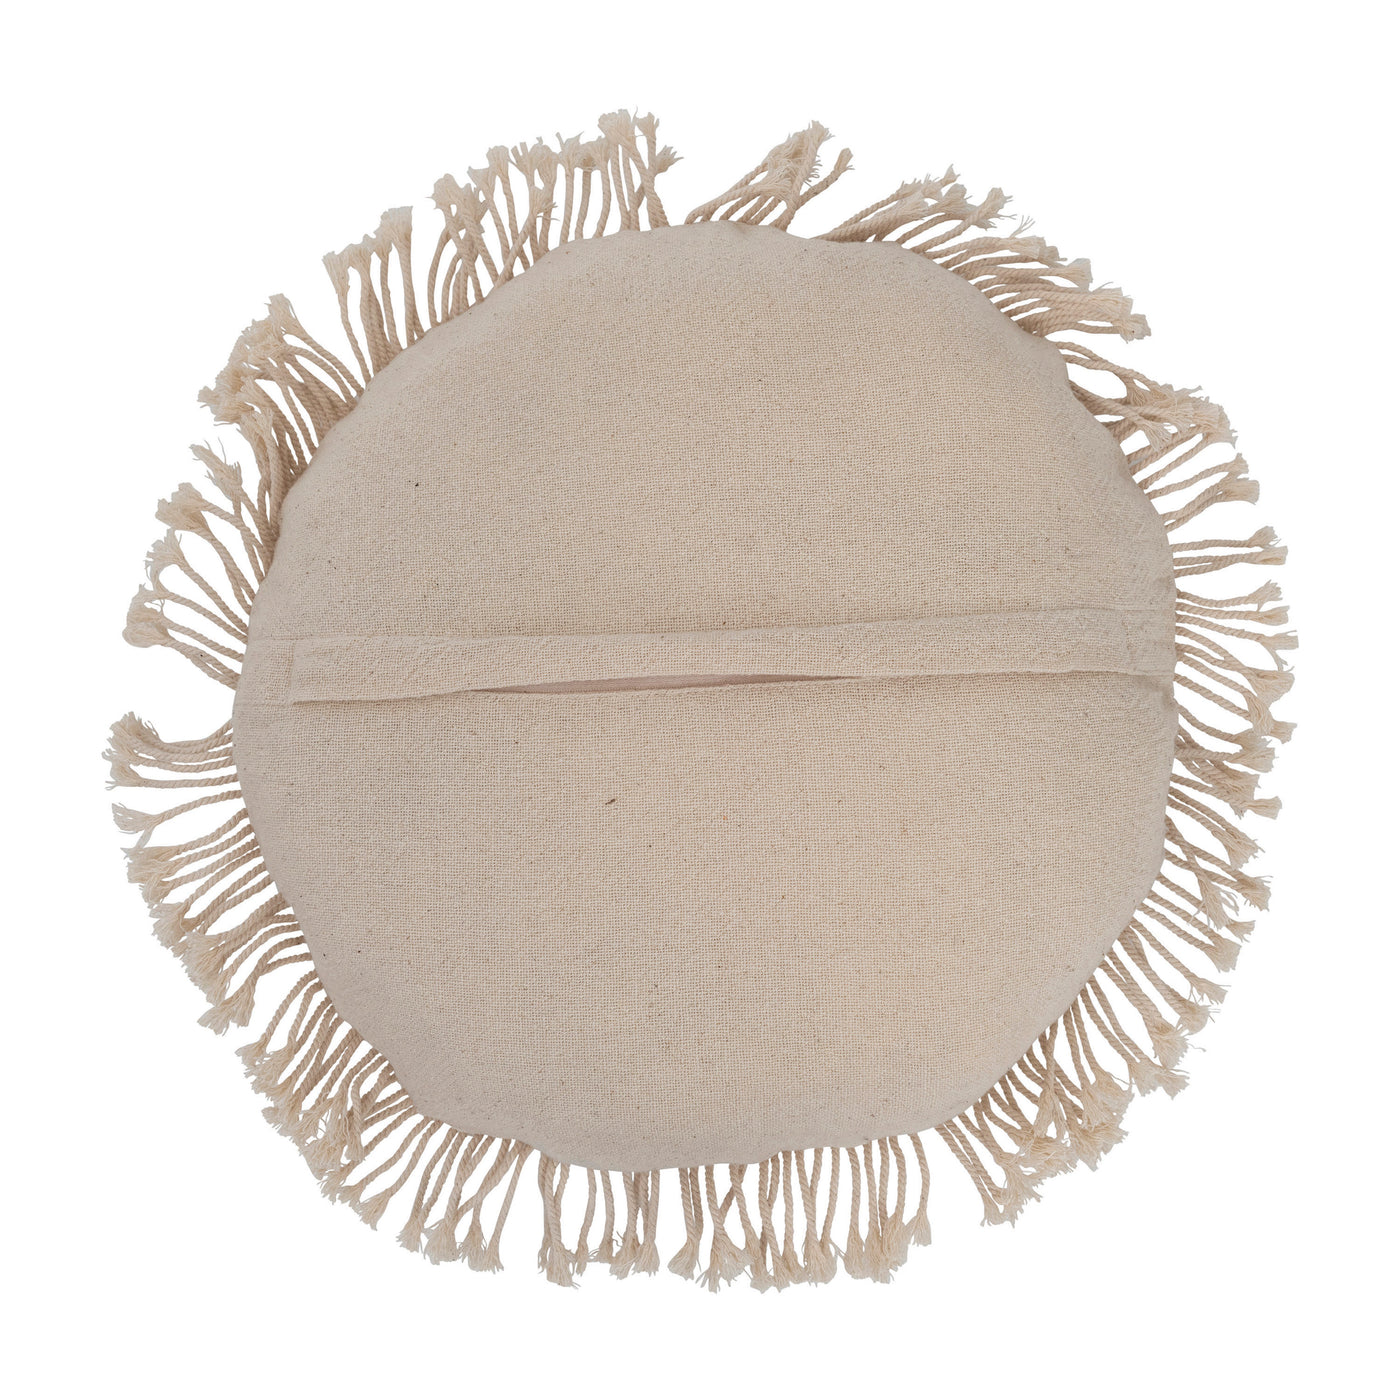 Woven Cotton & Jute Macrame Pillow with Fringe